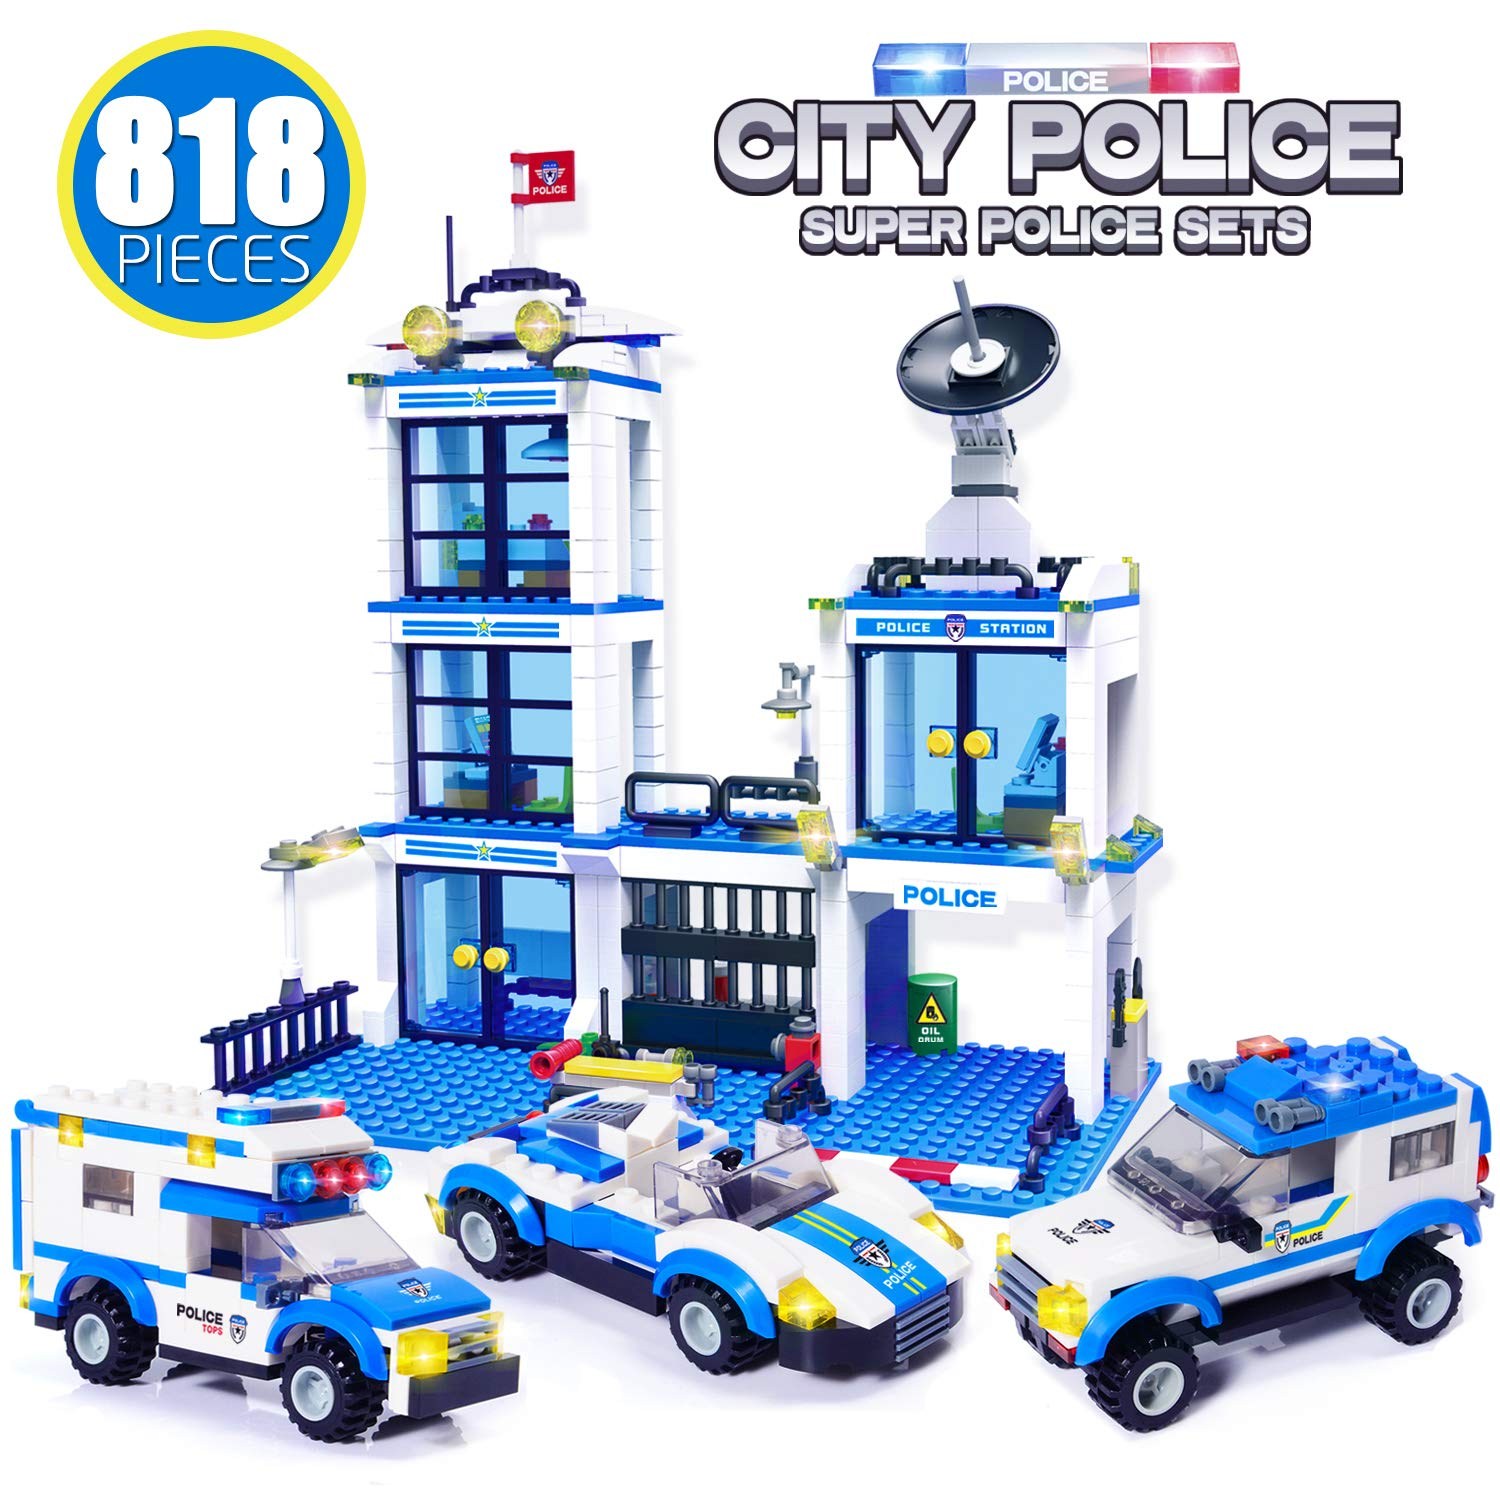 LEGO 레고 시티 경찰서 Super Police set (818 pieces) 